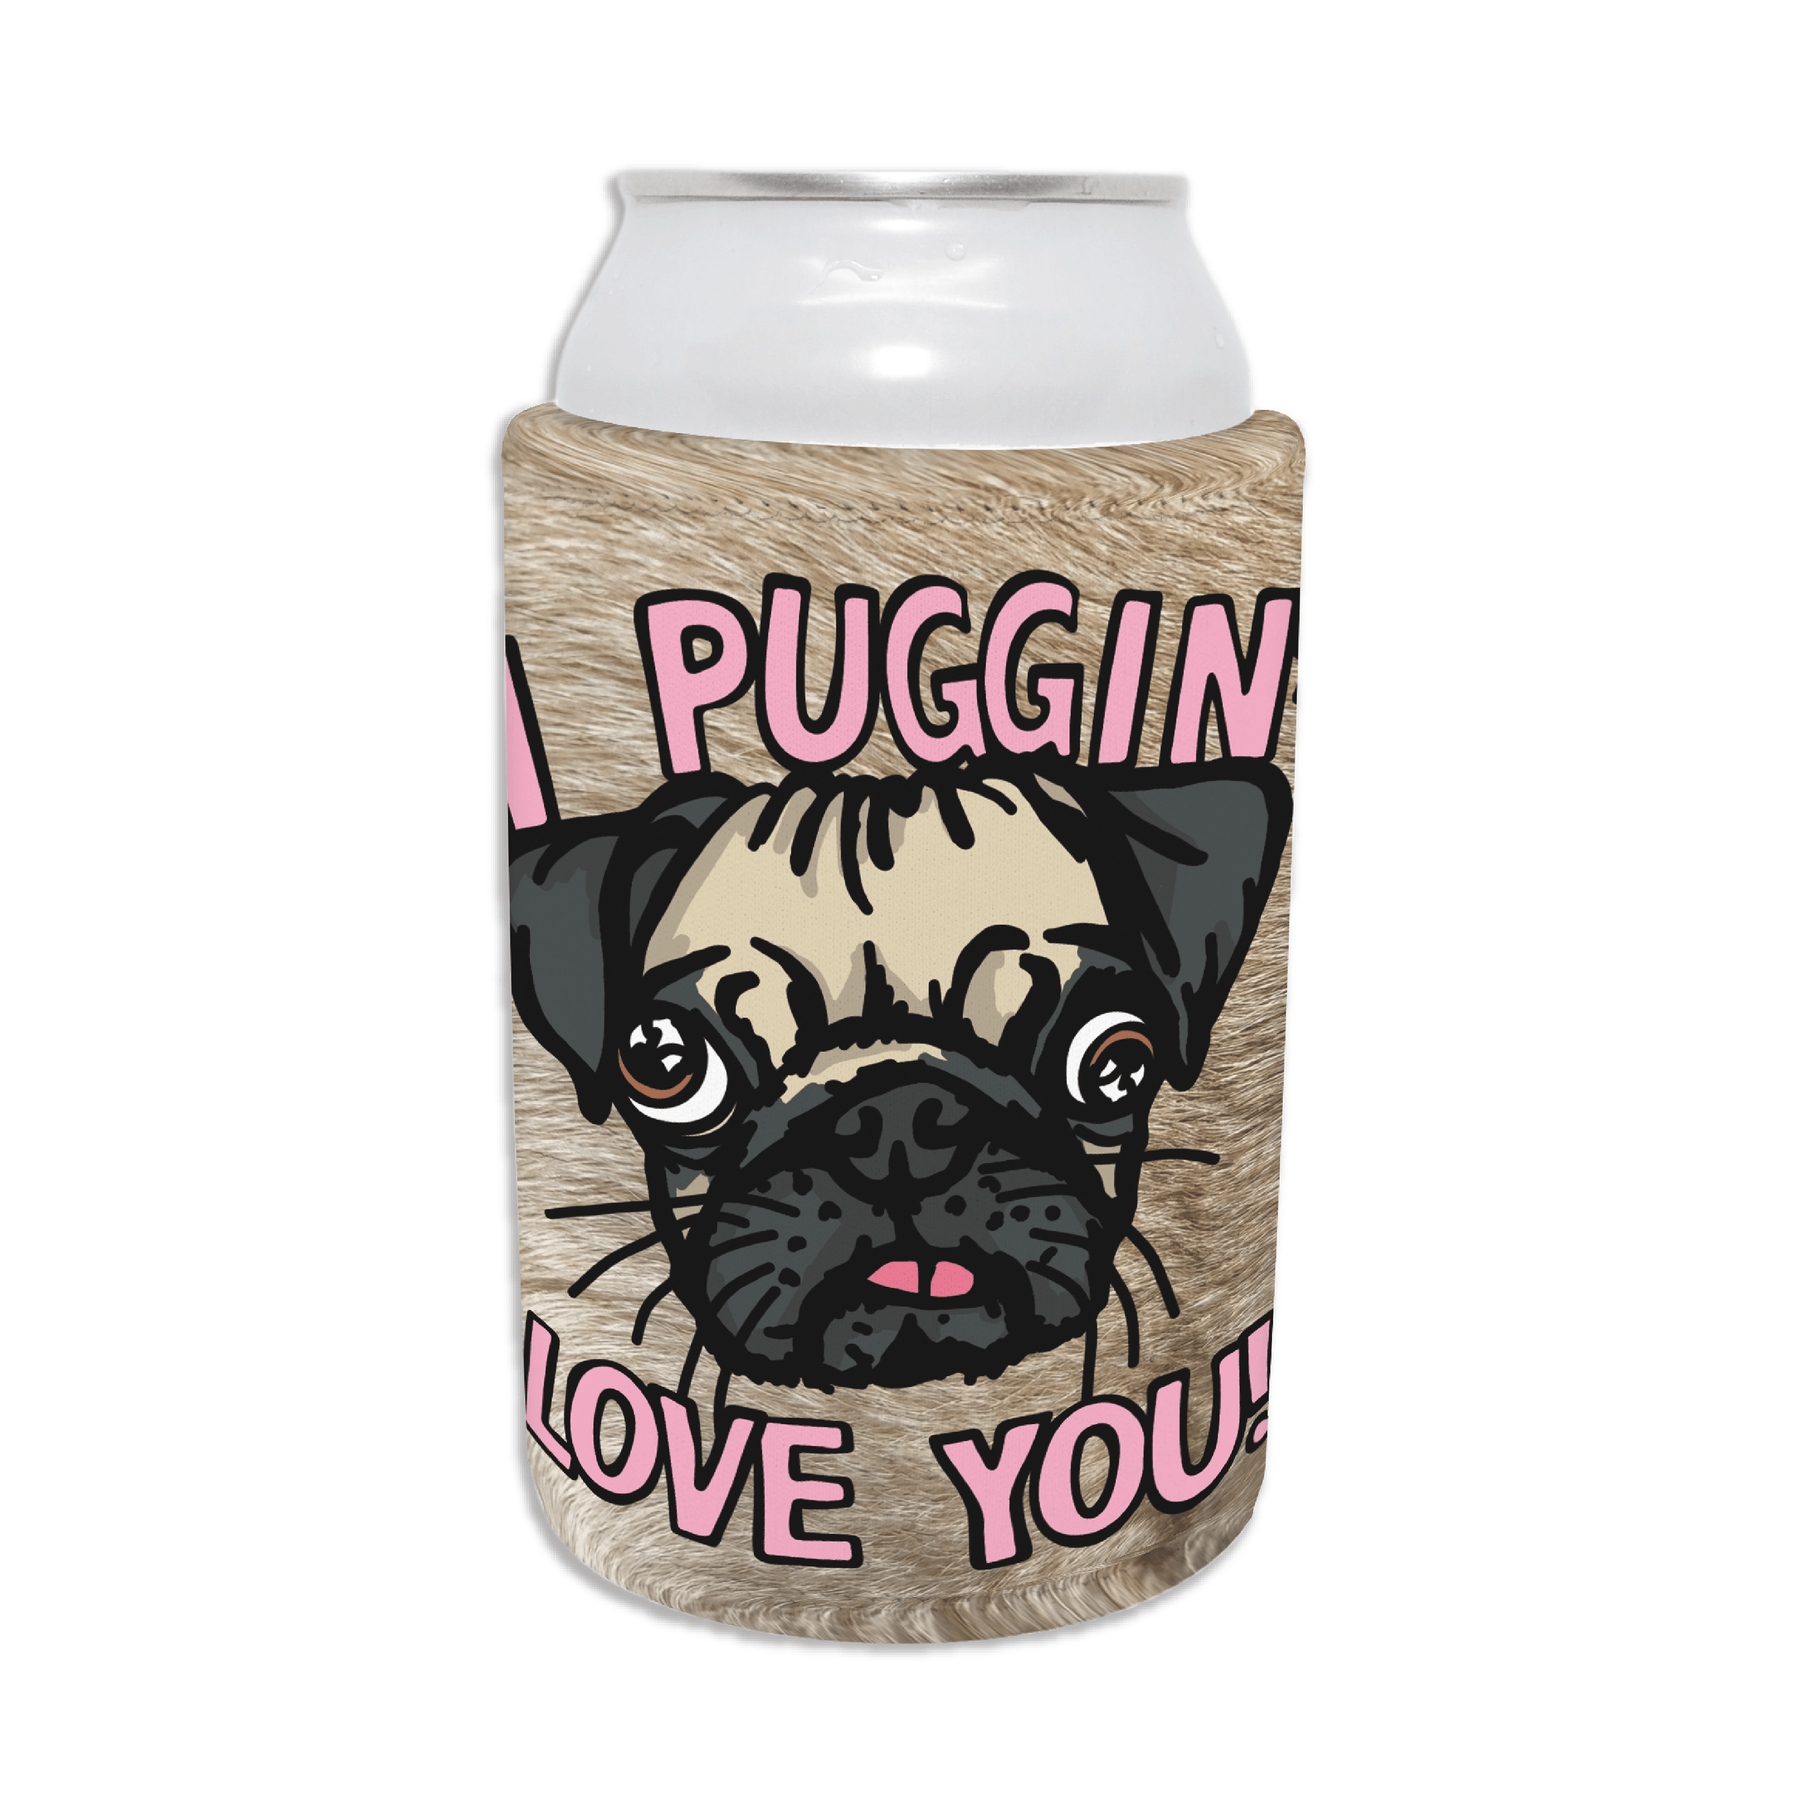 Puggin Love you 🐶❣️ - Stubby Holder